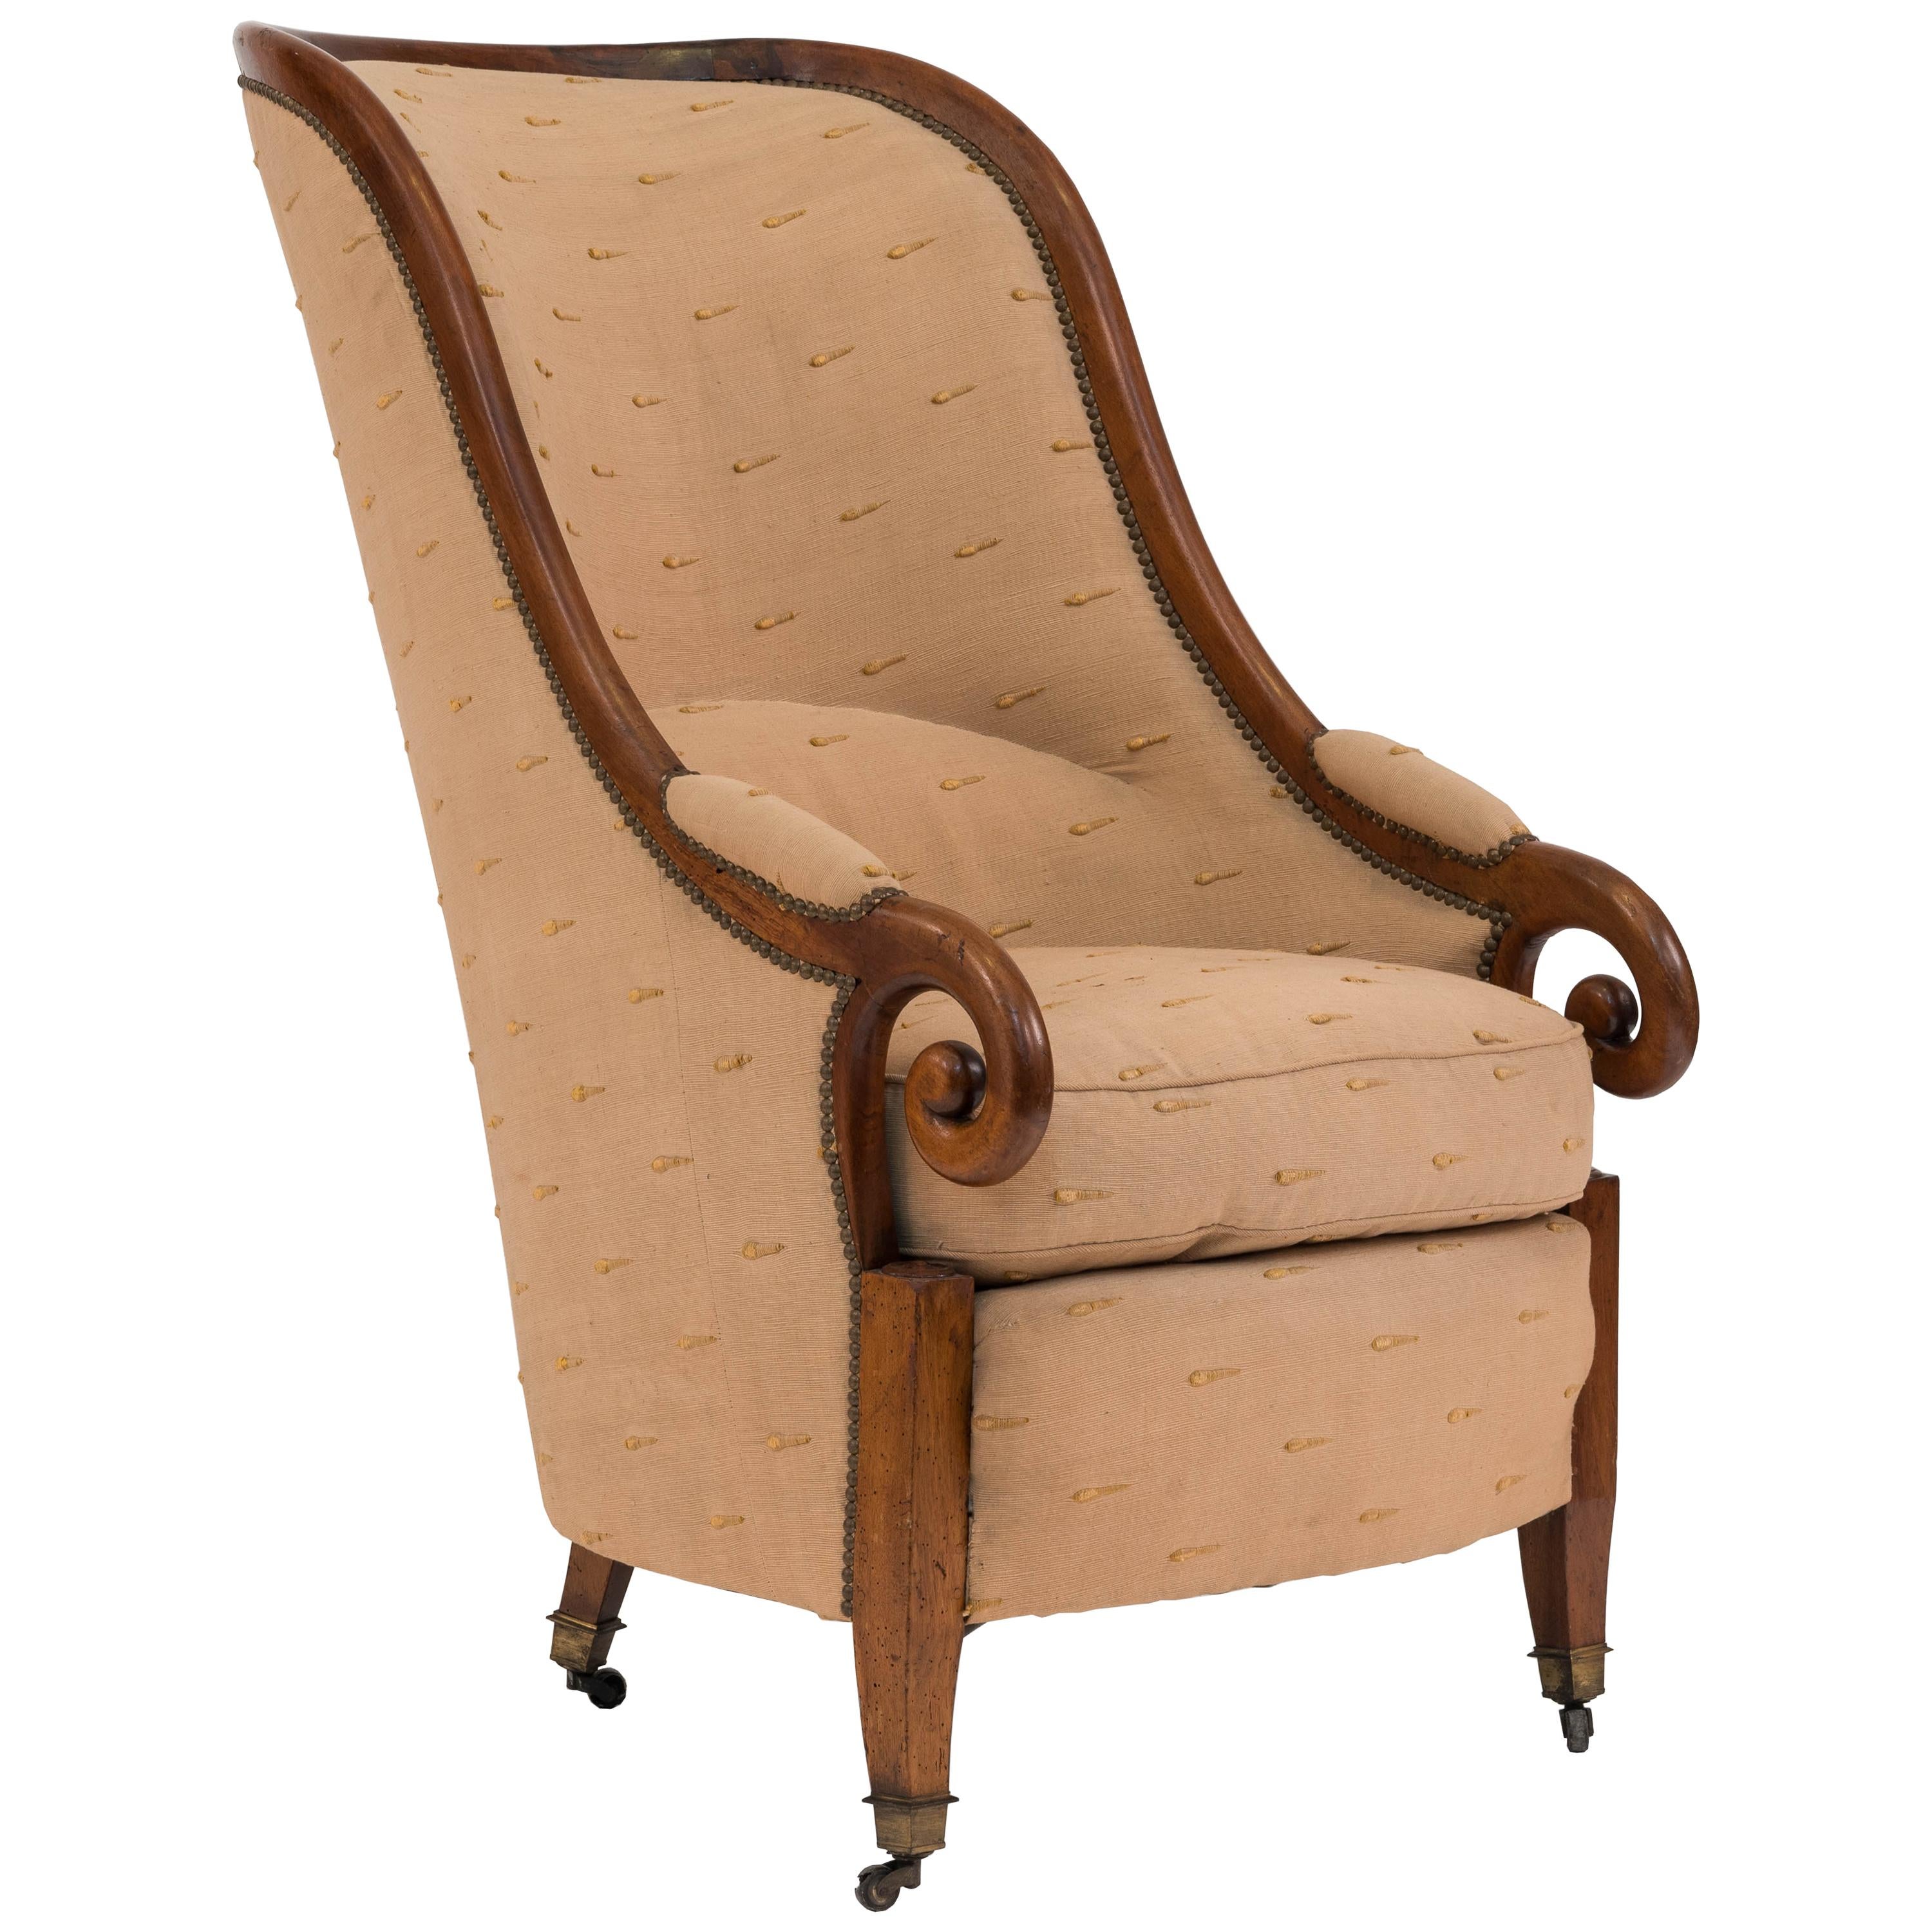 English Regency Style Club Chair